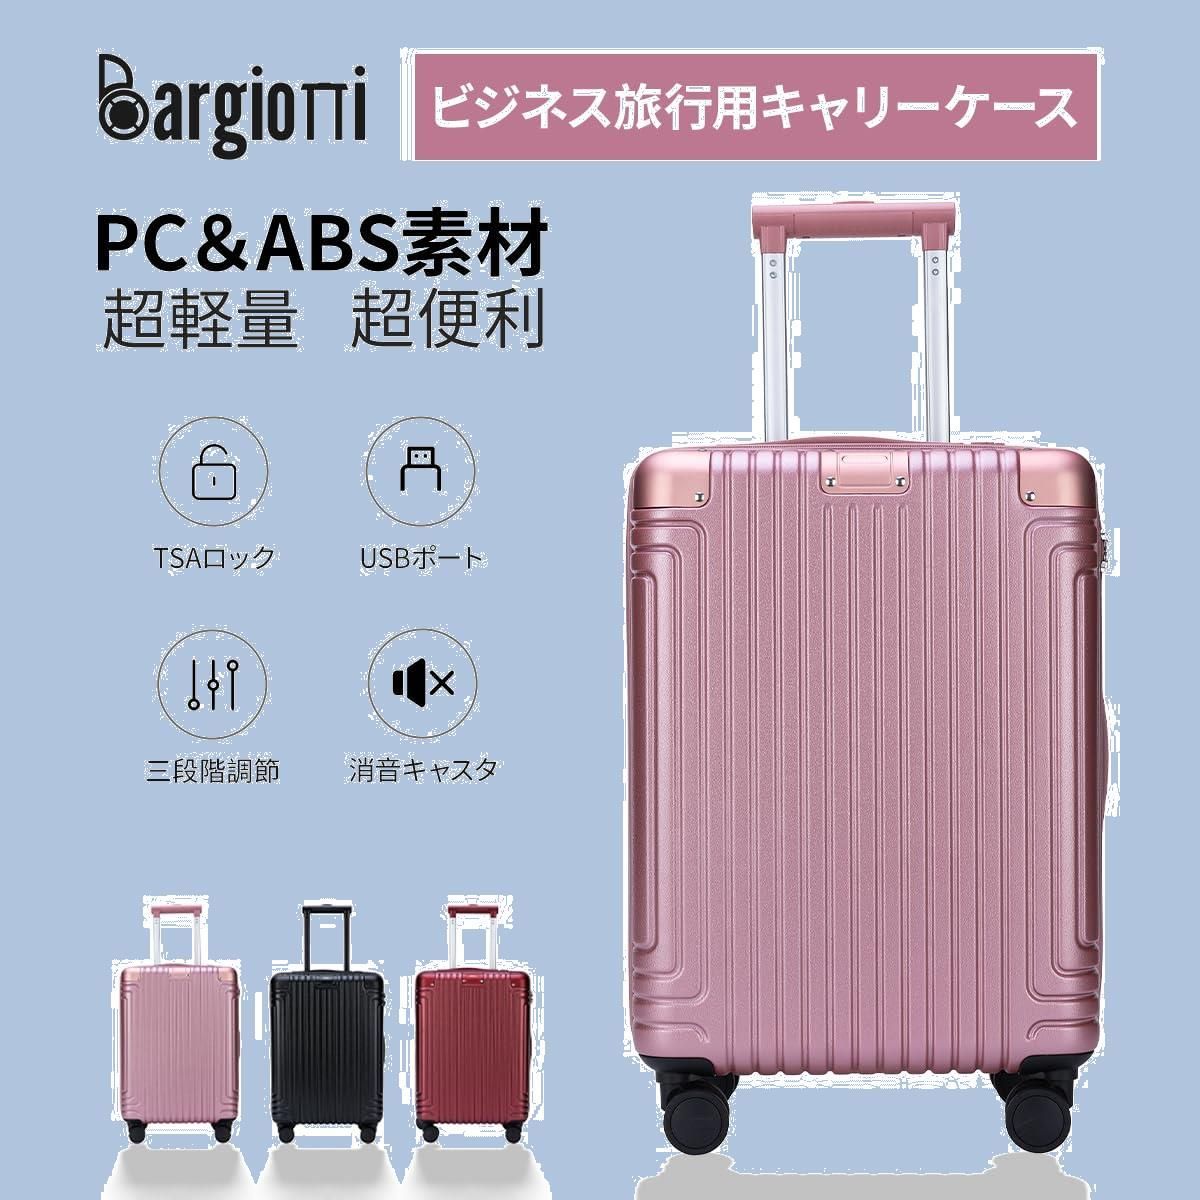 Bargiotti] ABS&PCスーツケース キャリーバッグ キャリーケース 大容量 ...